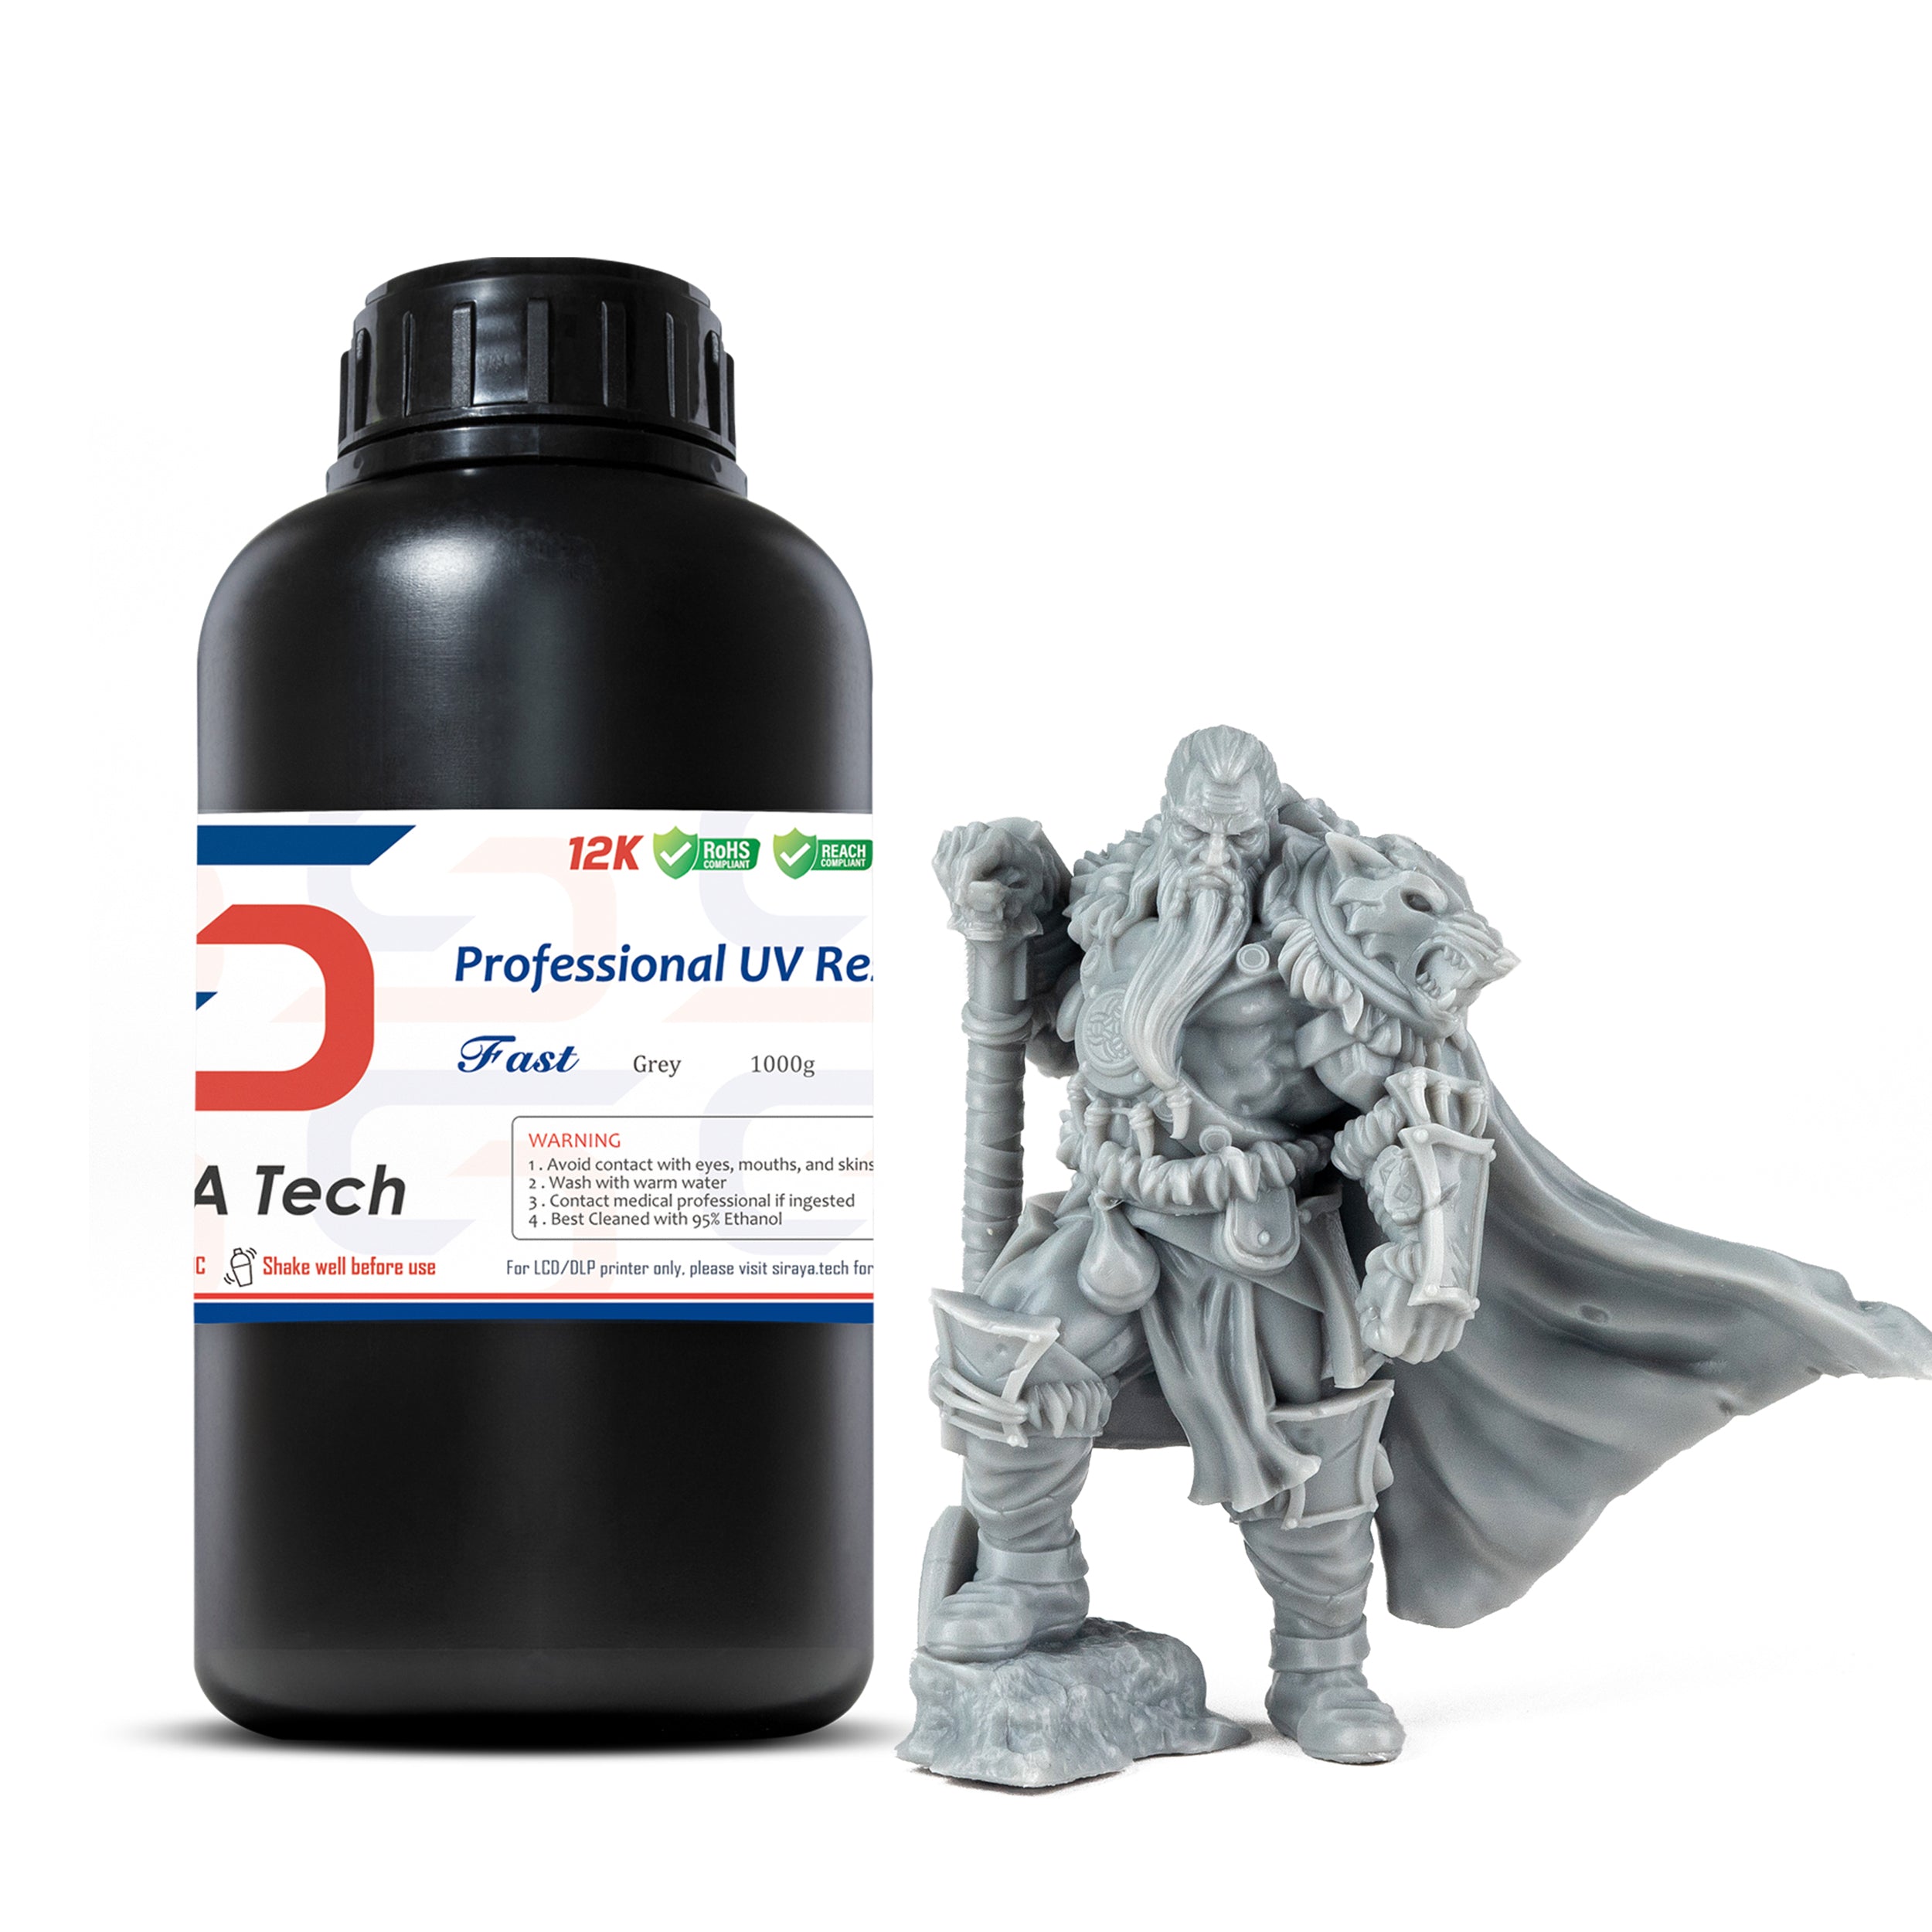 ELEGOO ABS-like Photopolymer Resin V2.0 Grey 10KG – ELEGOO Official